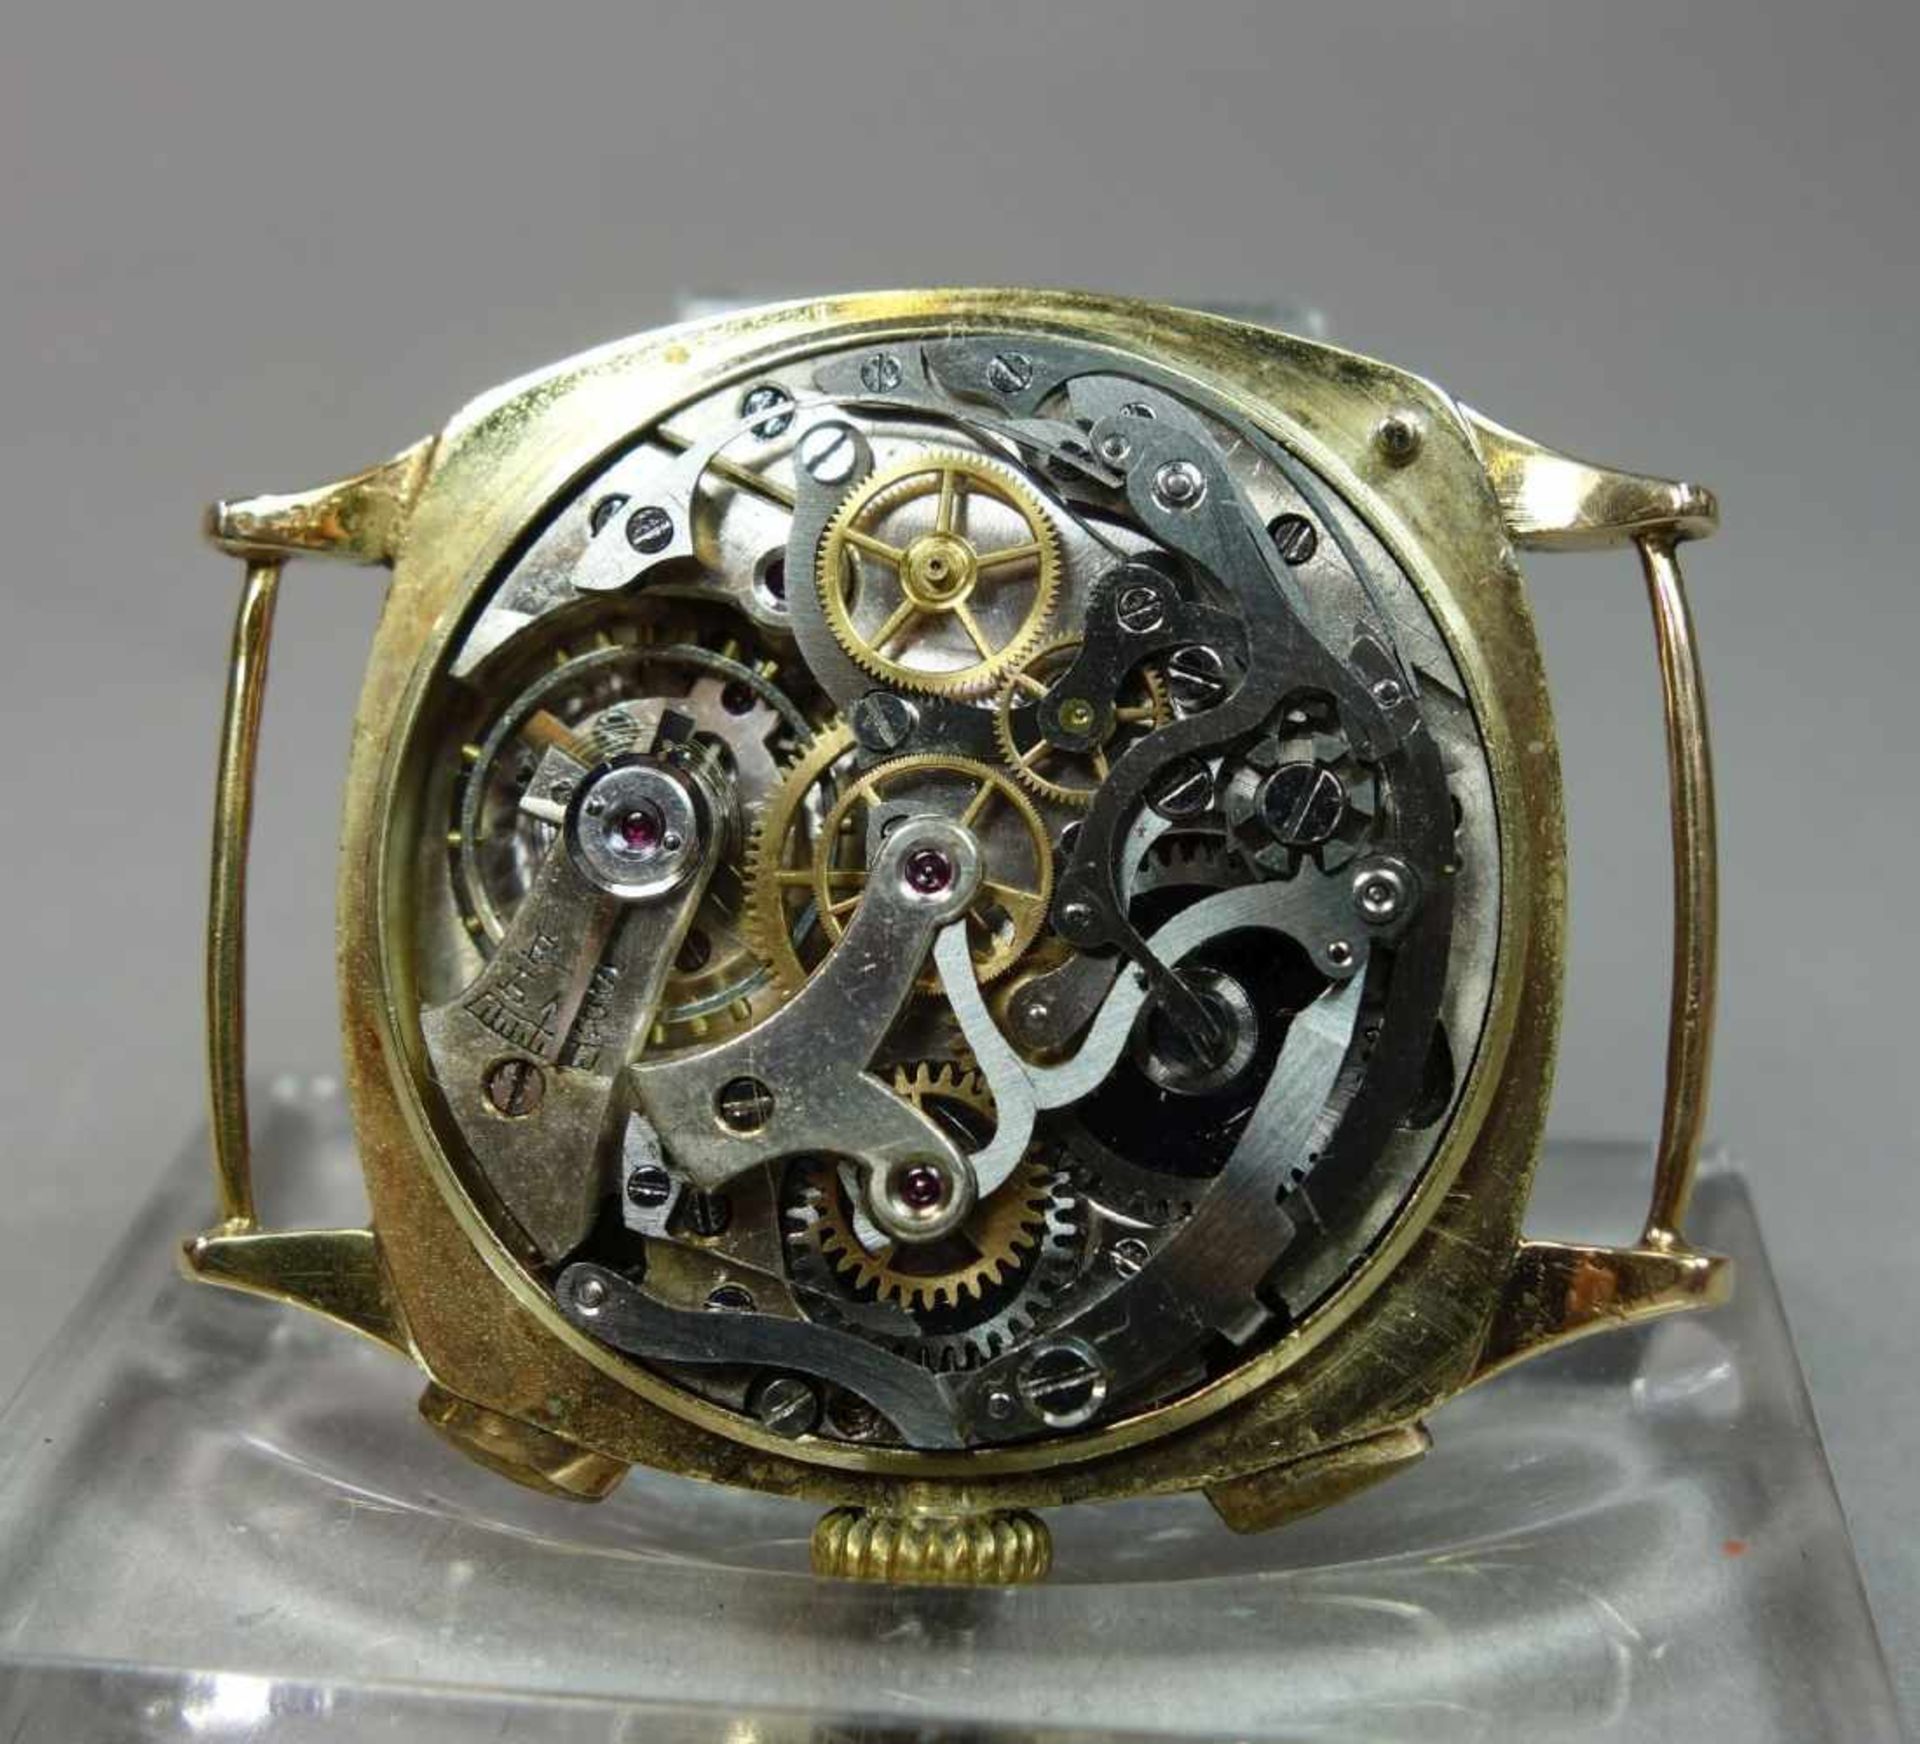 VINTAGE ARMBANDUHR / CHRONOGRAPH: Minerva / vintage wristwatch, wohl 1930er Jahre, Manufaktur - Bild 7 aus 7